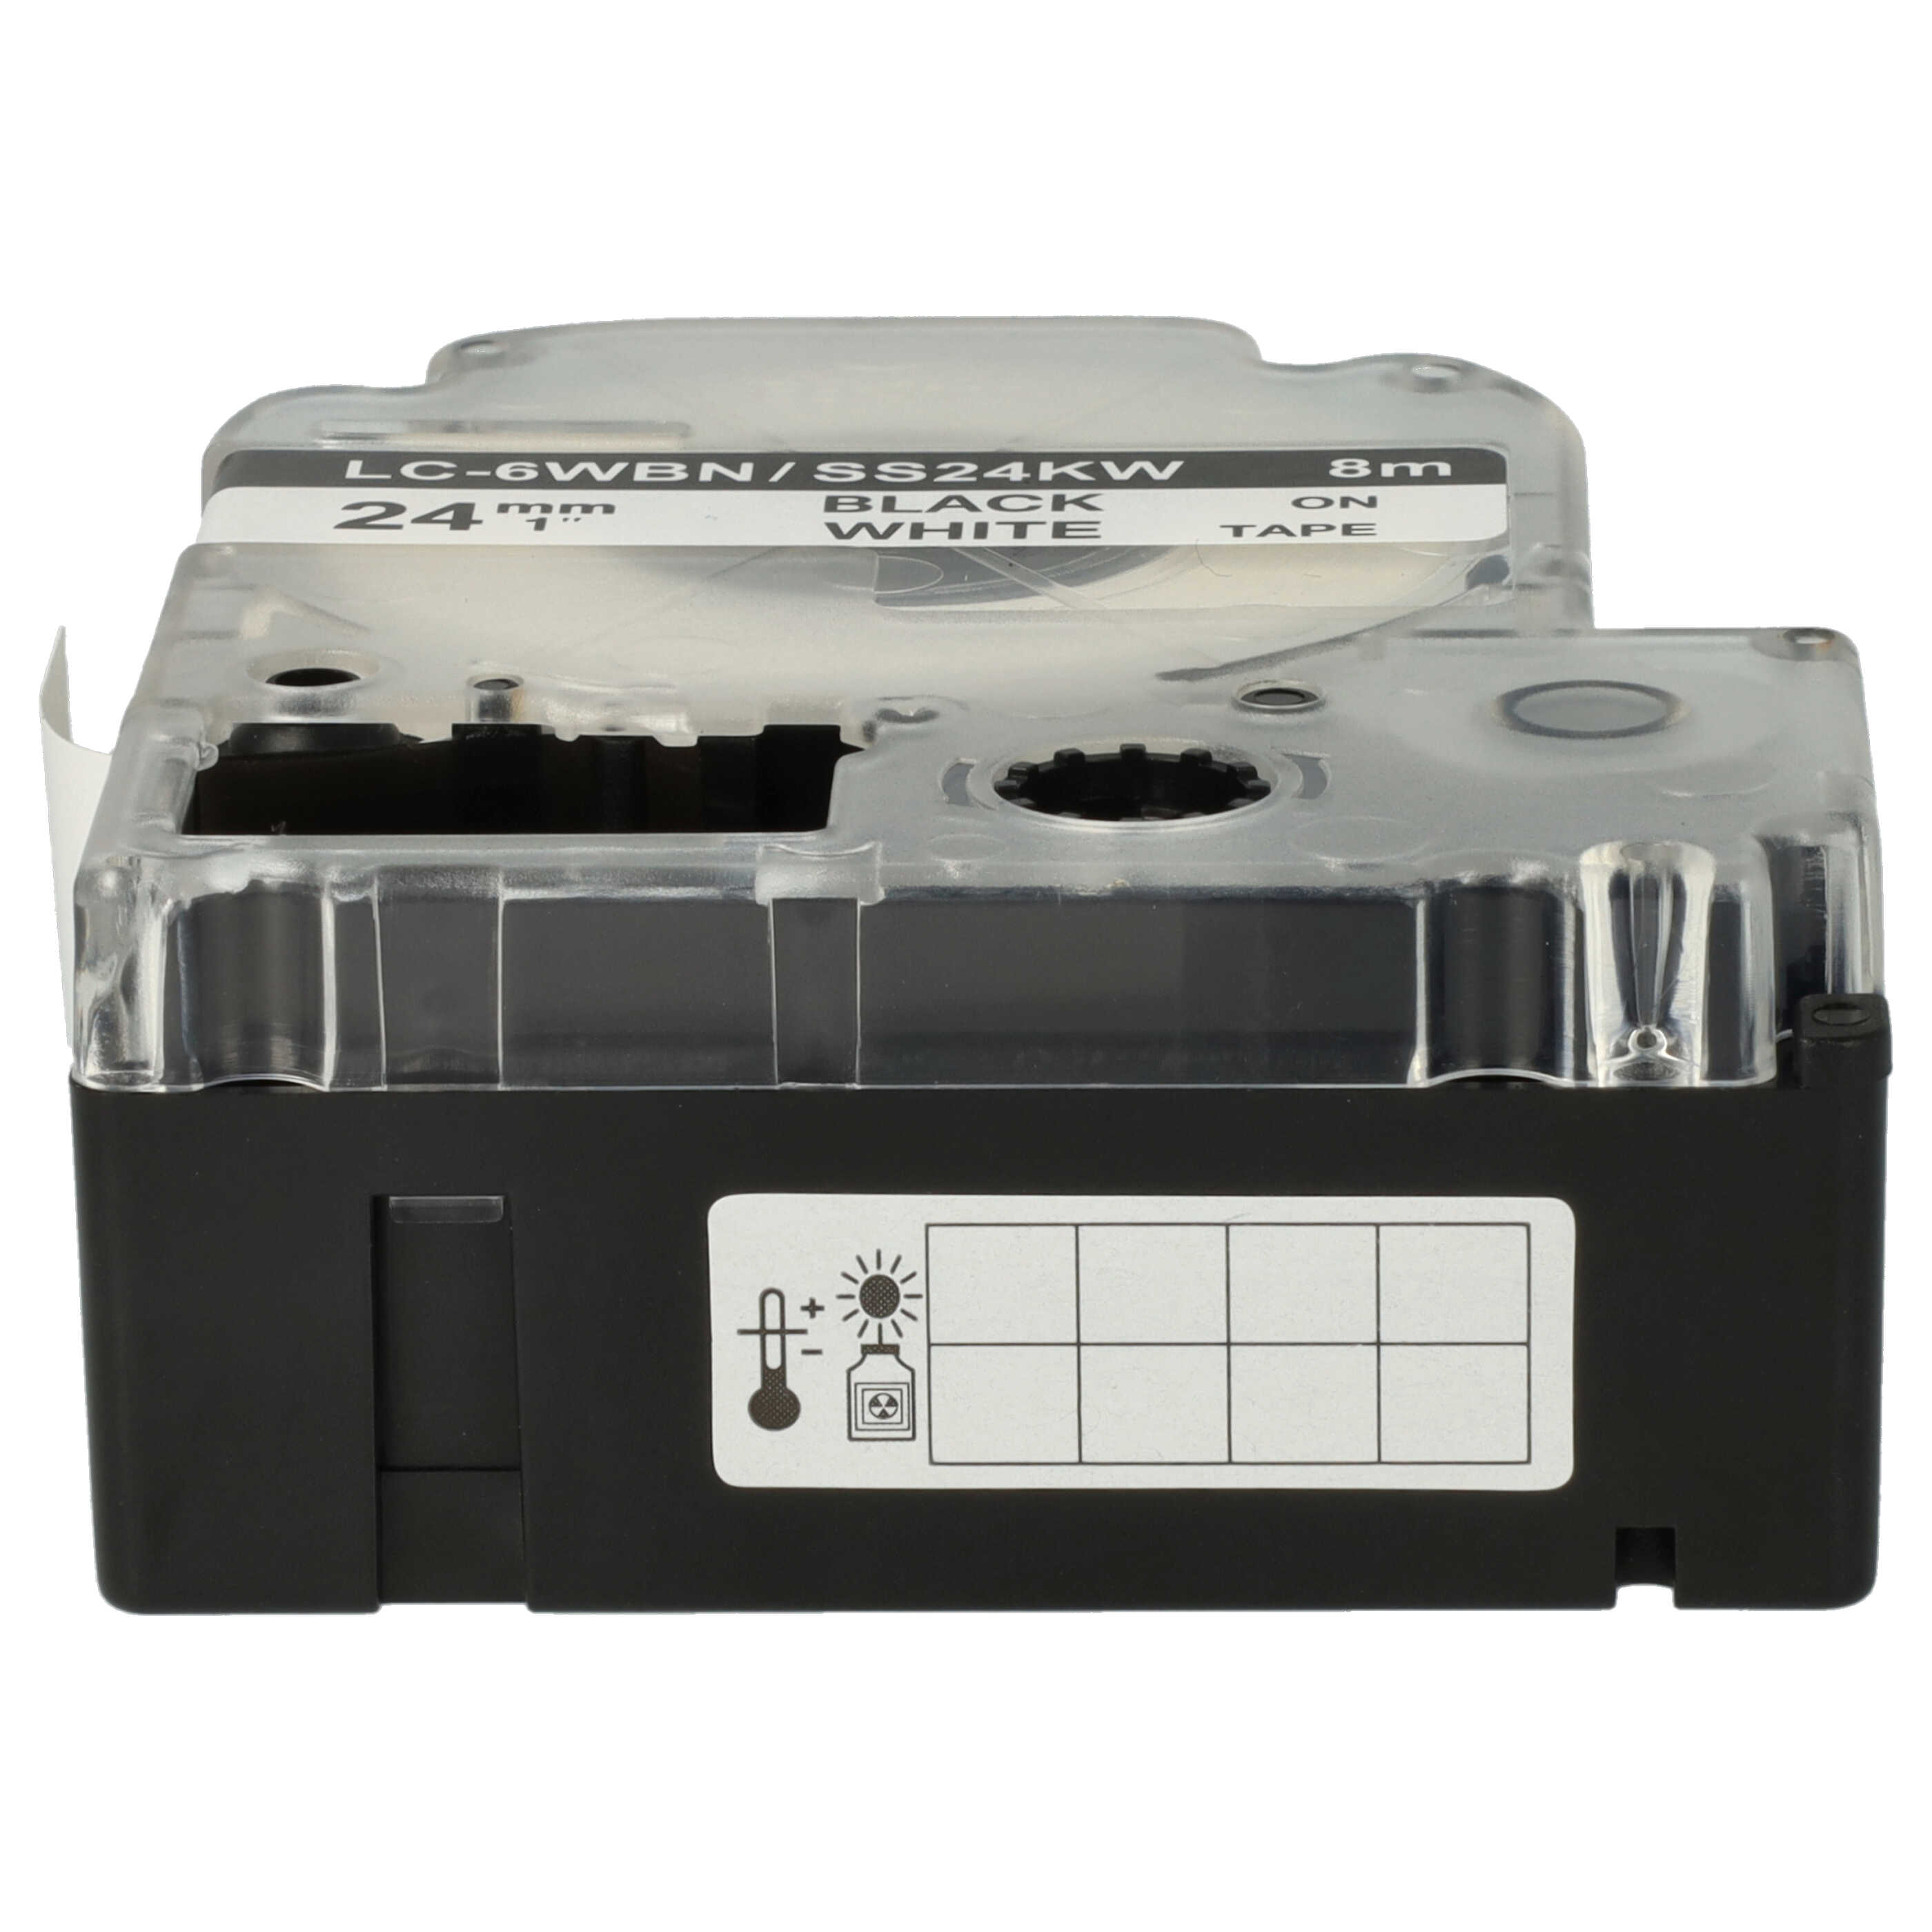 5x Casete cinta escritura reemplaza Epson LC-6WBN Negro su Blanco